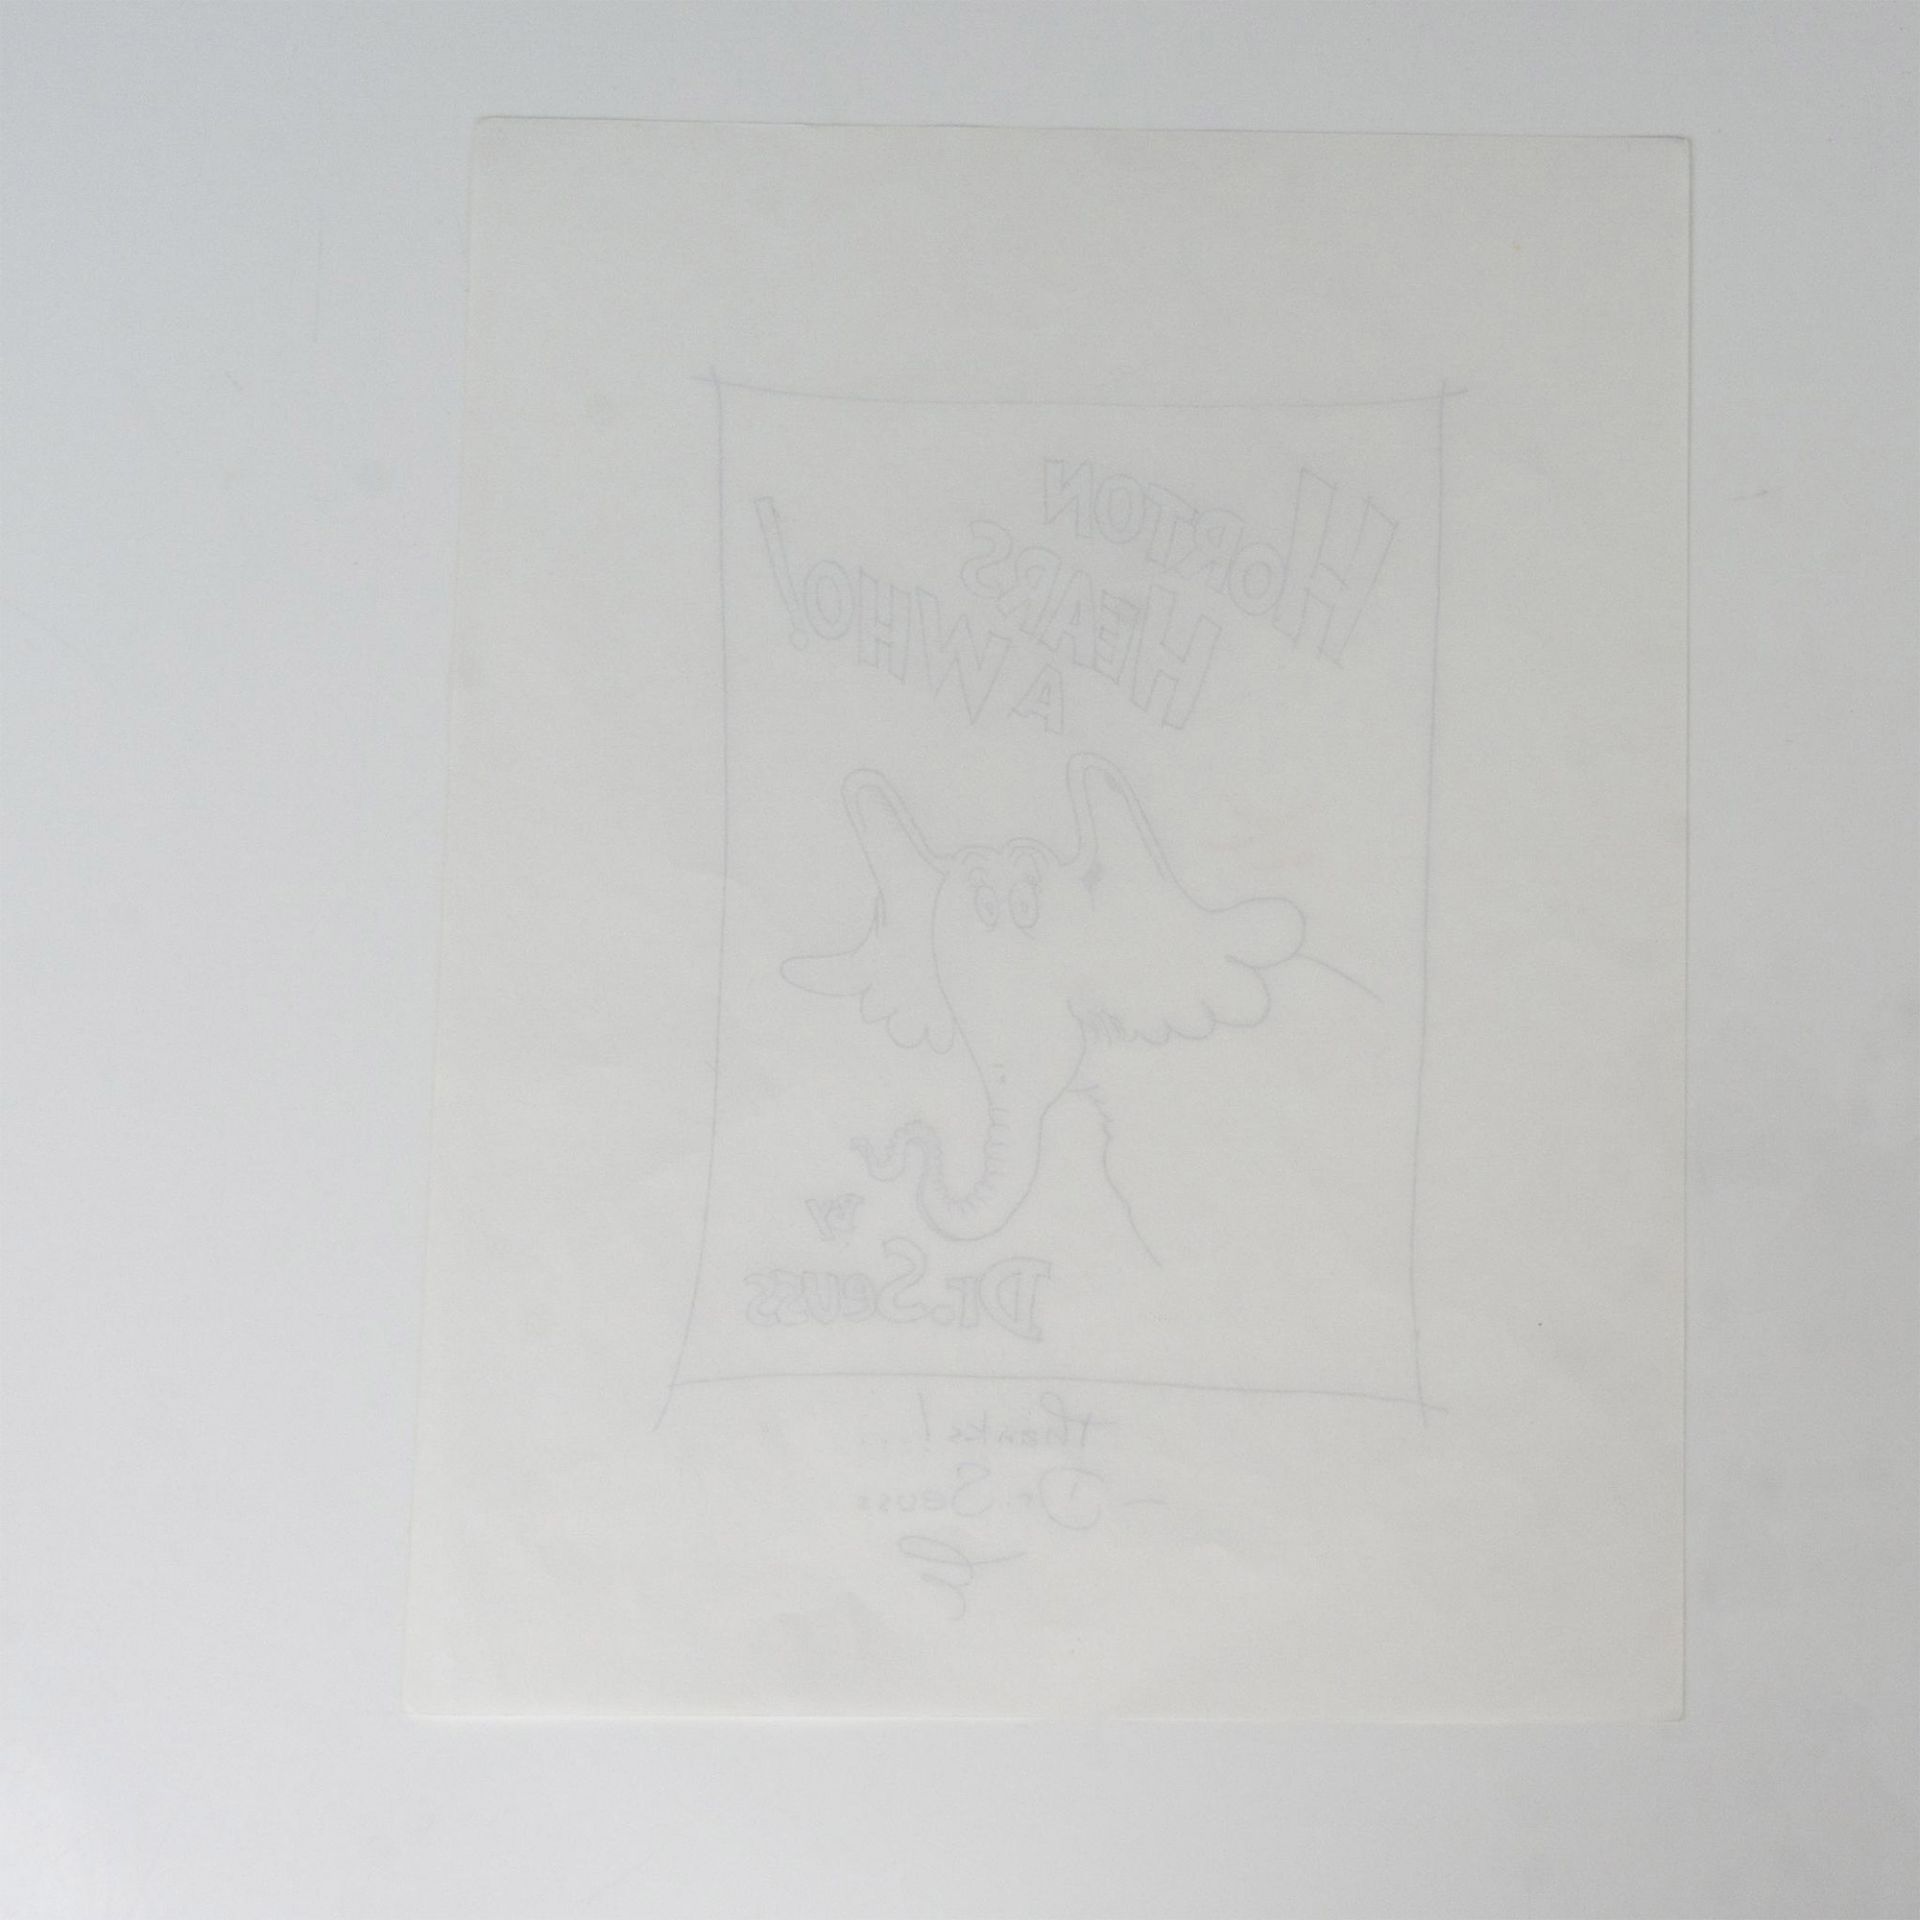 Dr. Seuss (attr.) Original Ink Drawing on Paper, Signed - Image 3 of 3